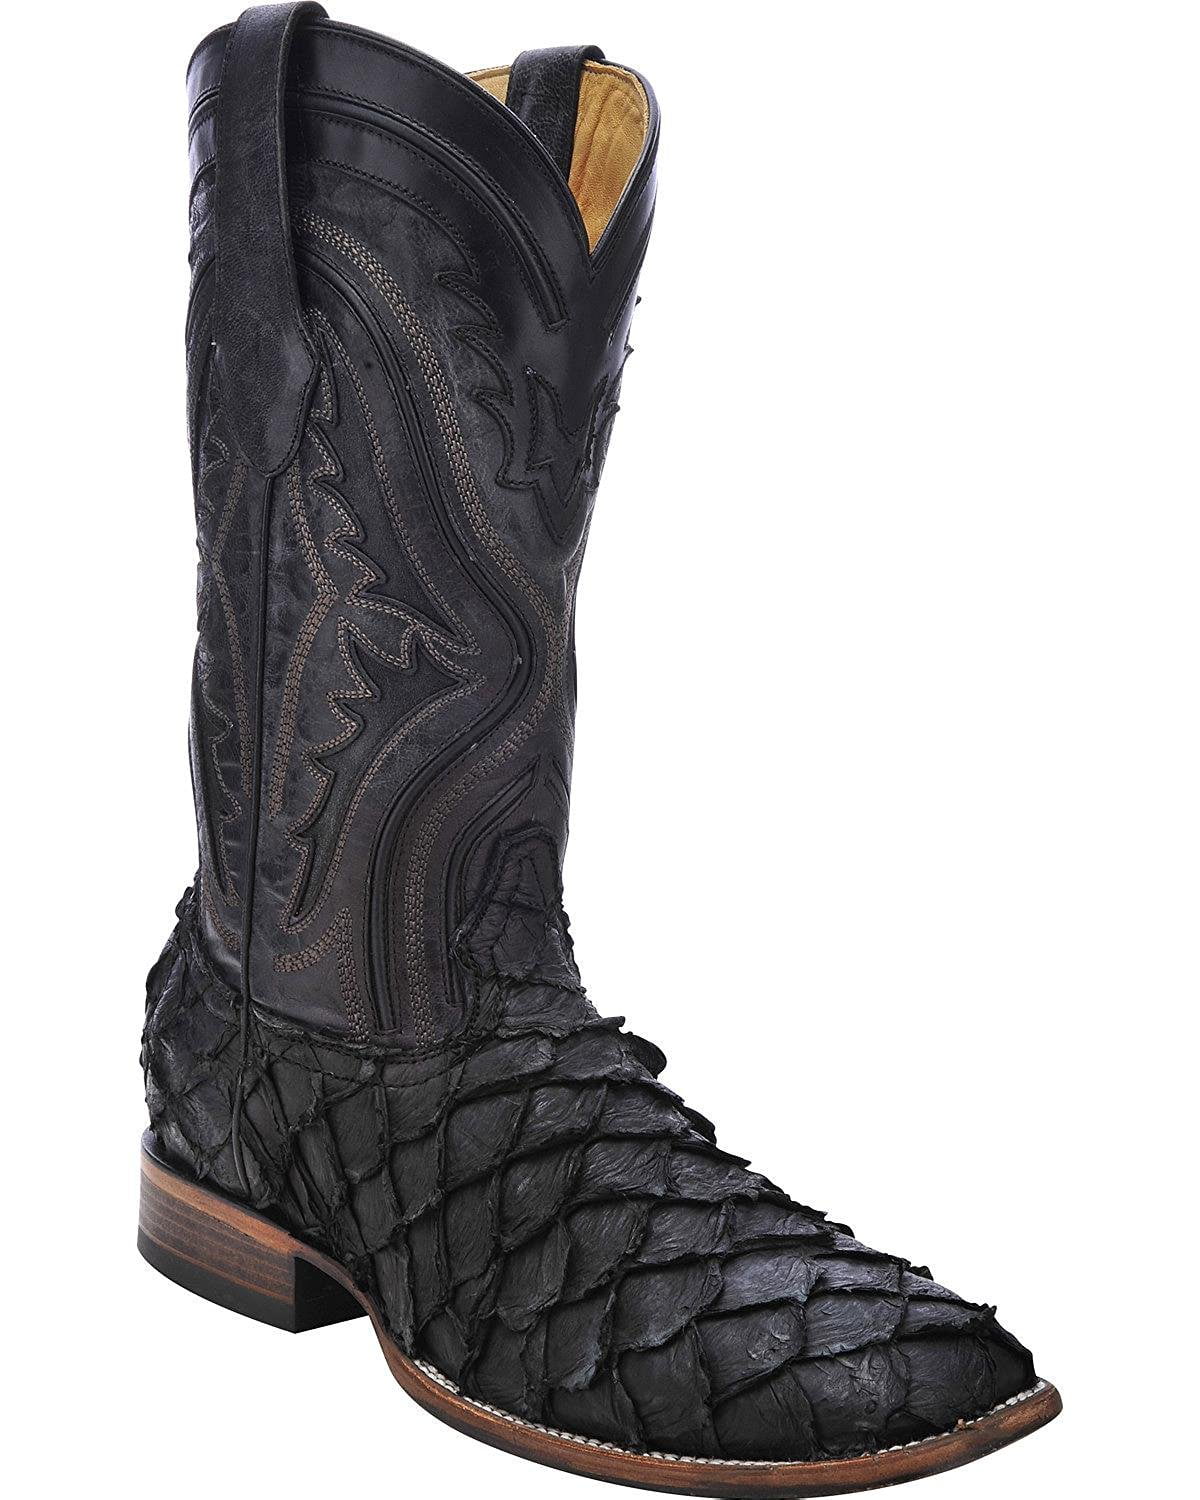 pirarucu fish cowboy boots